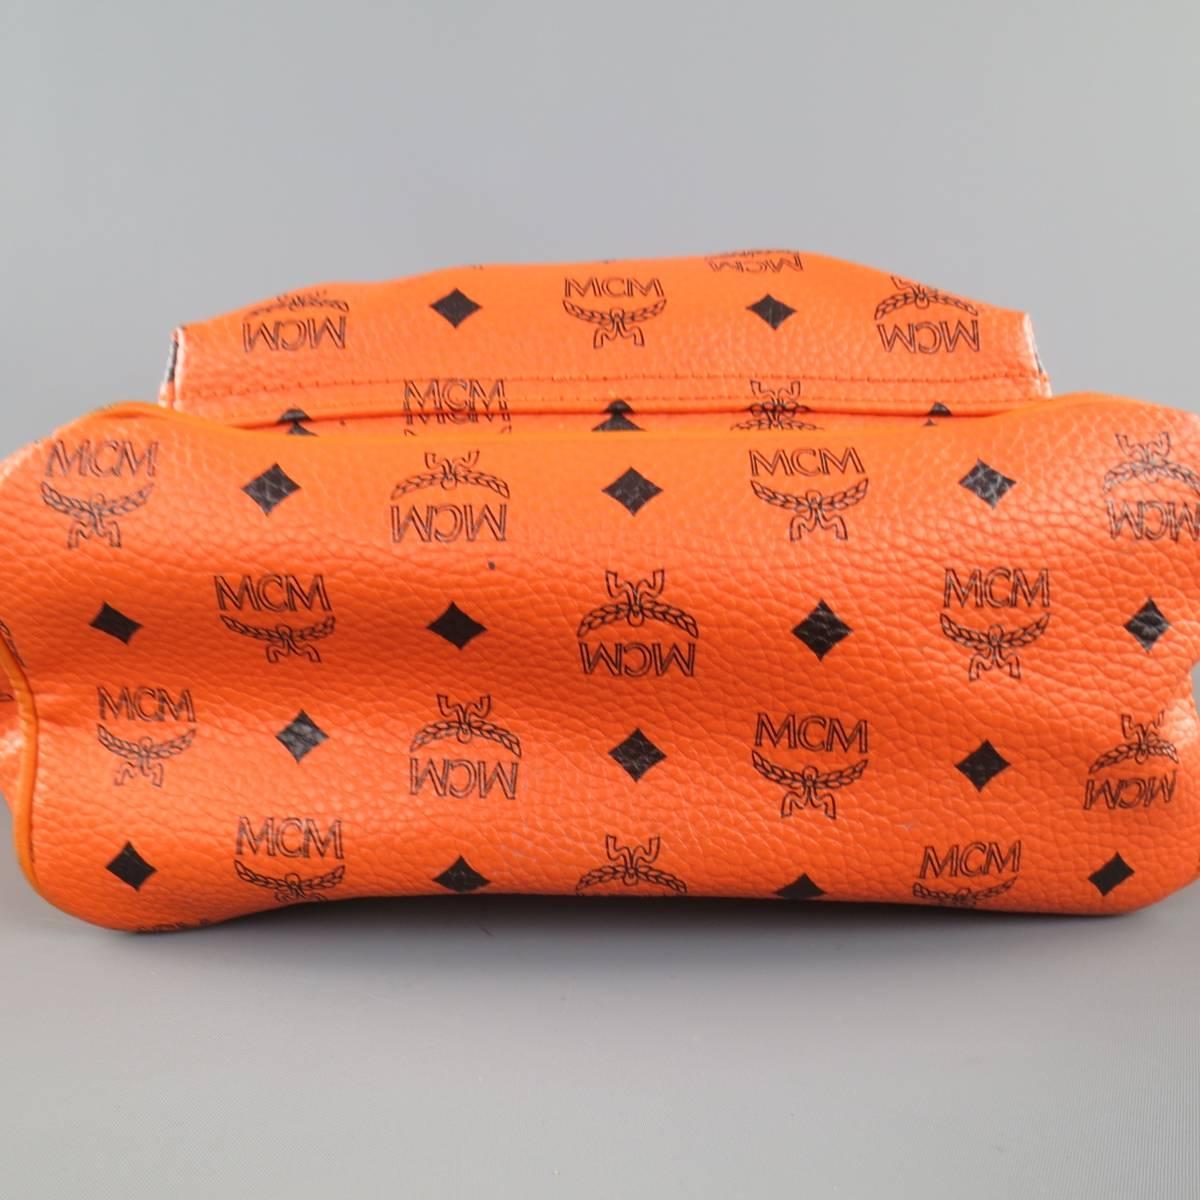 mcm backpack orange